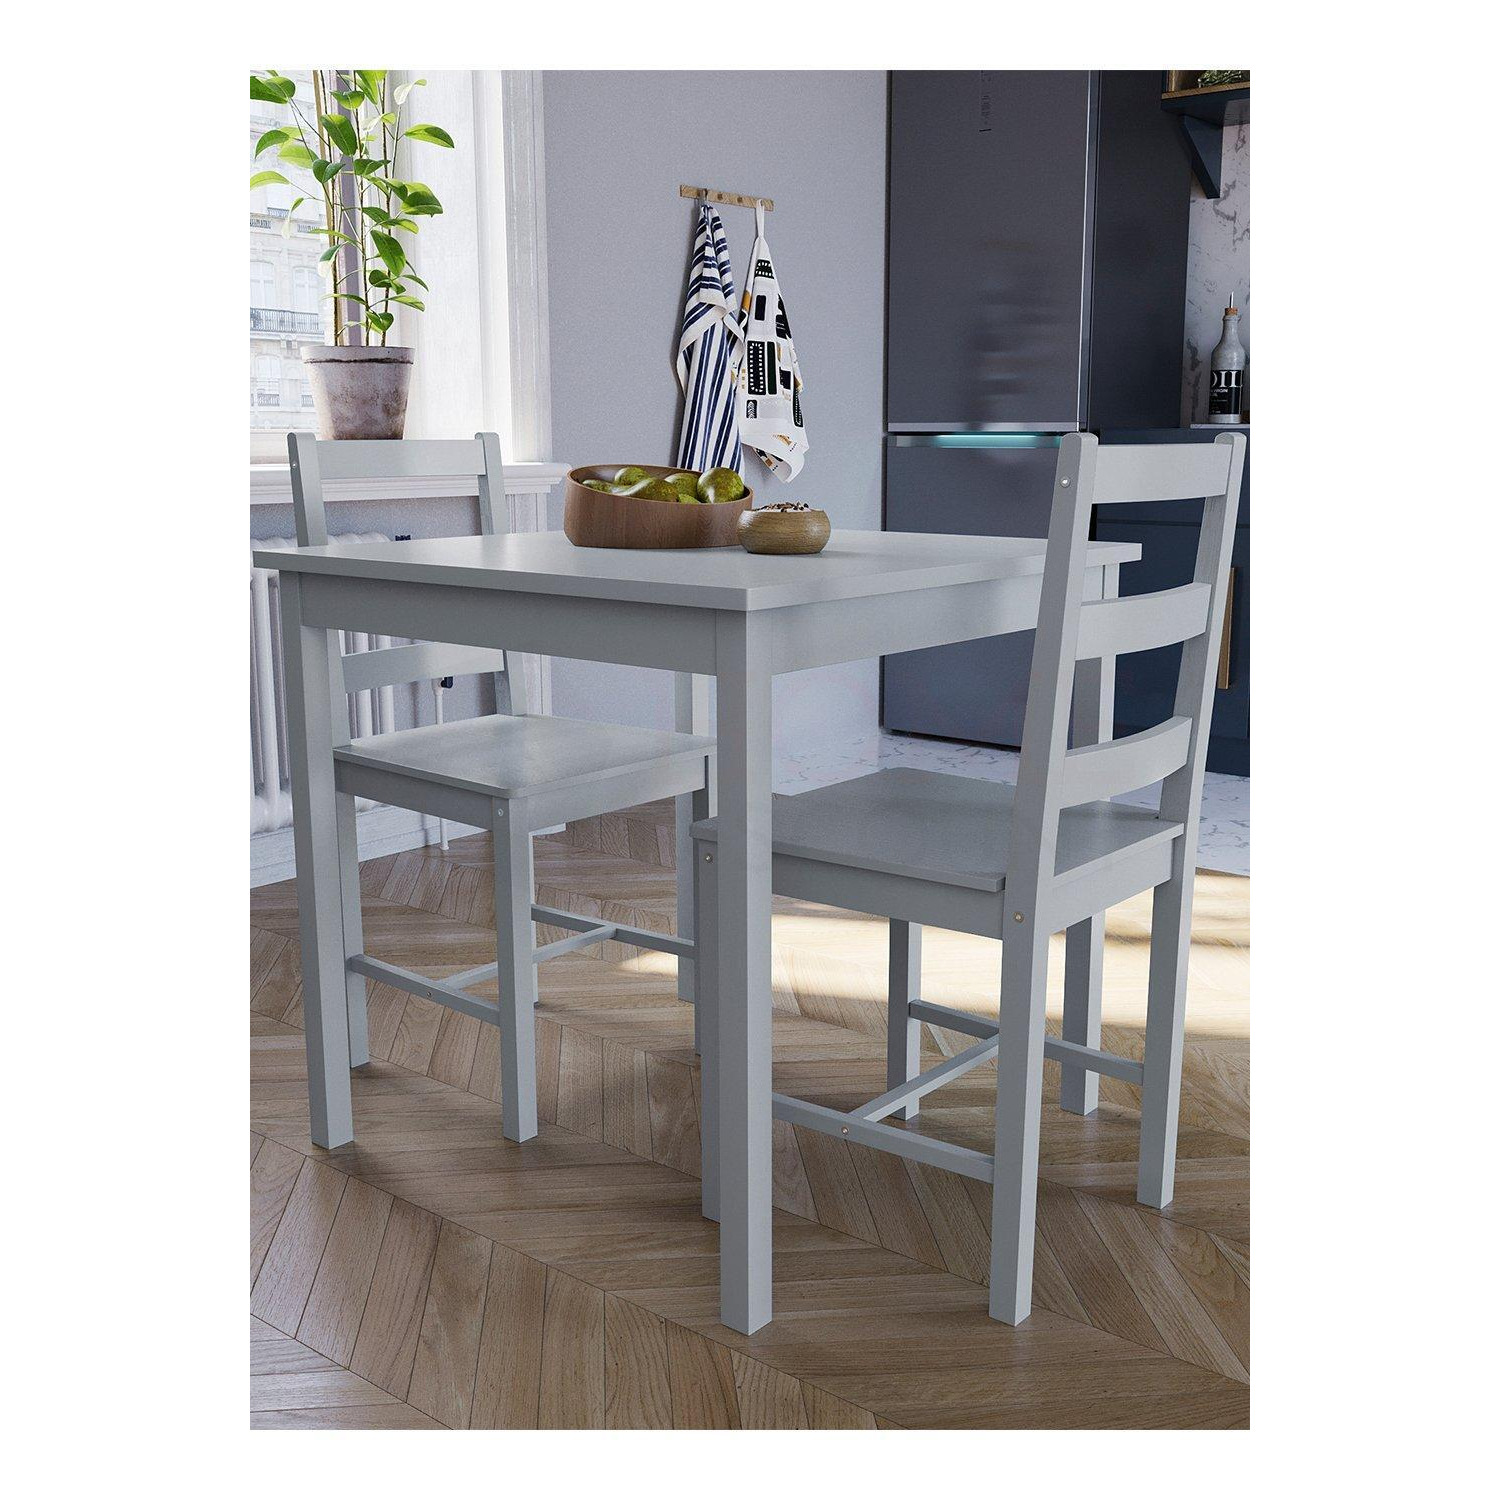 Vida Designs Yorkshire 2 Seater Dining Set Kitchen Furniture - image 1